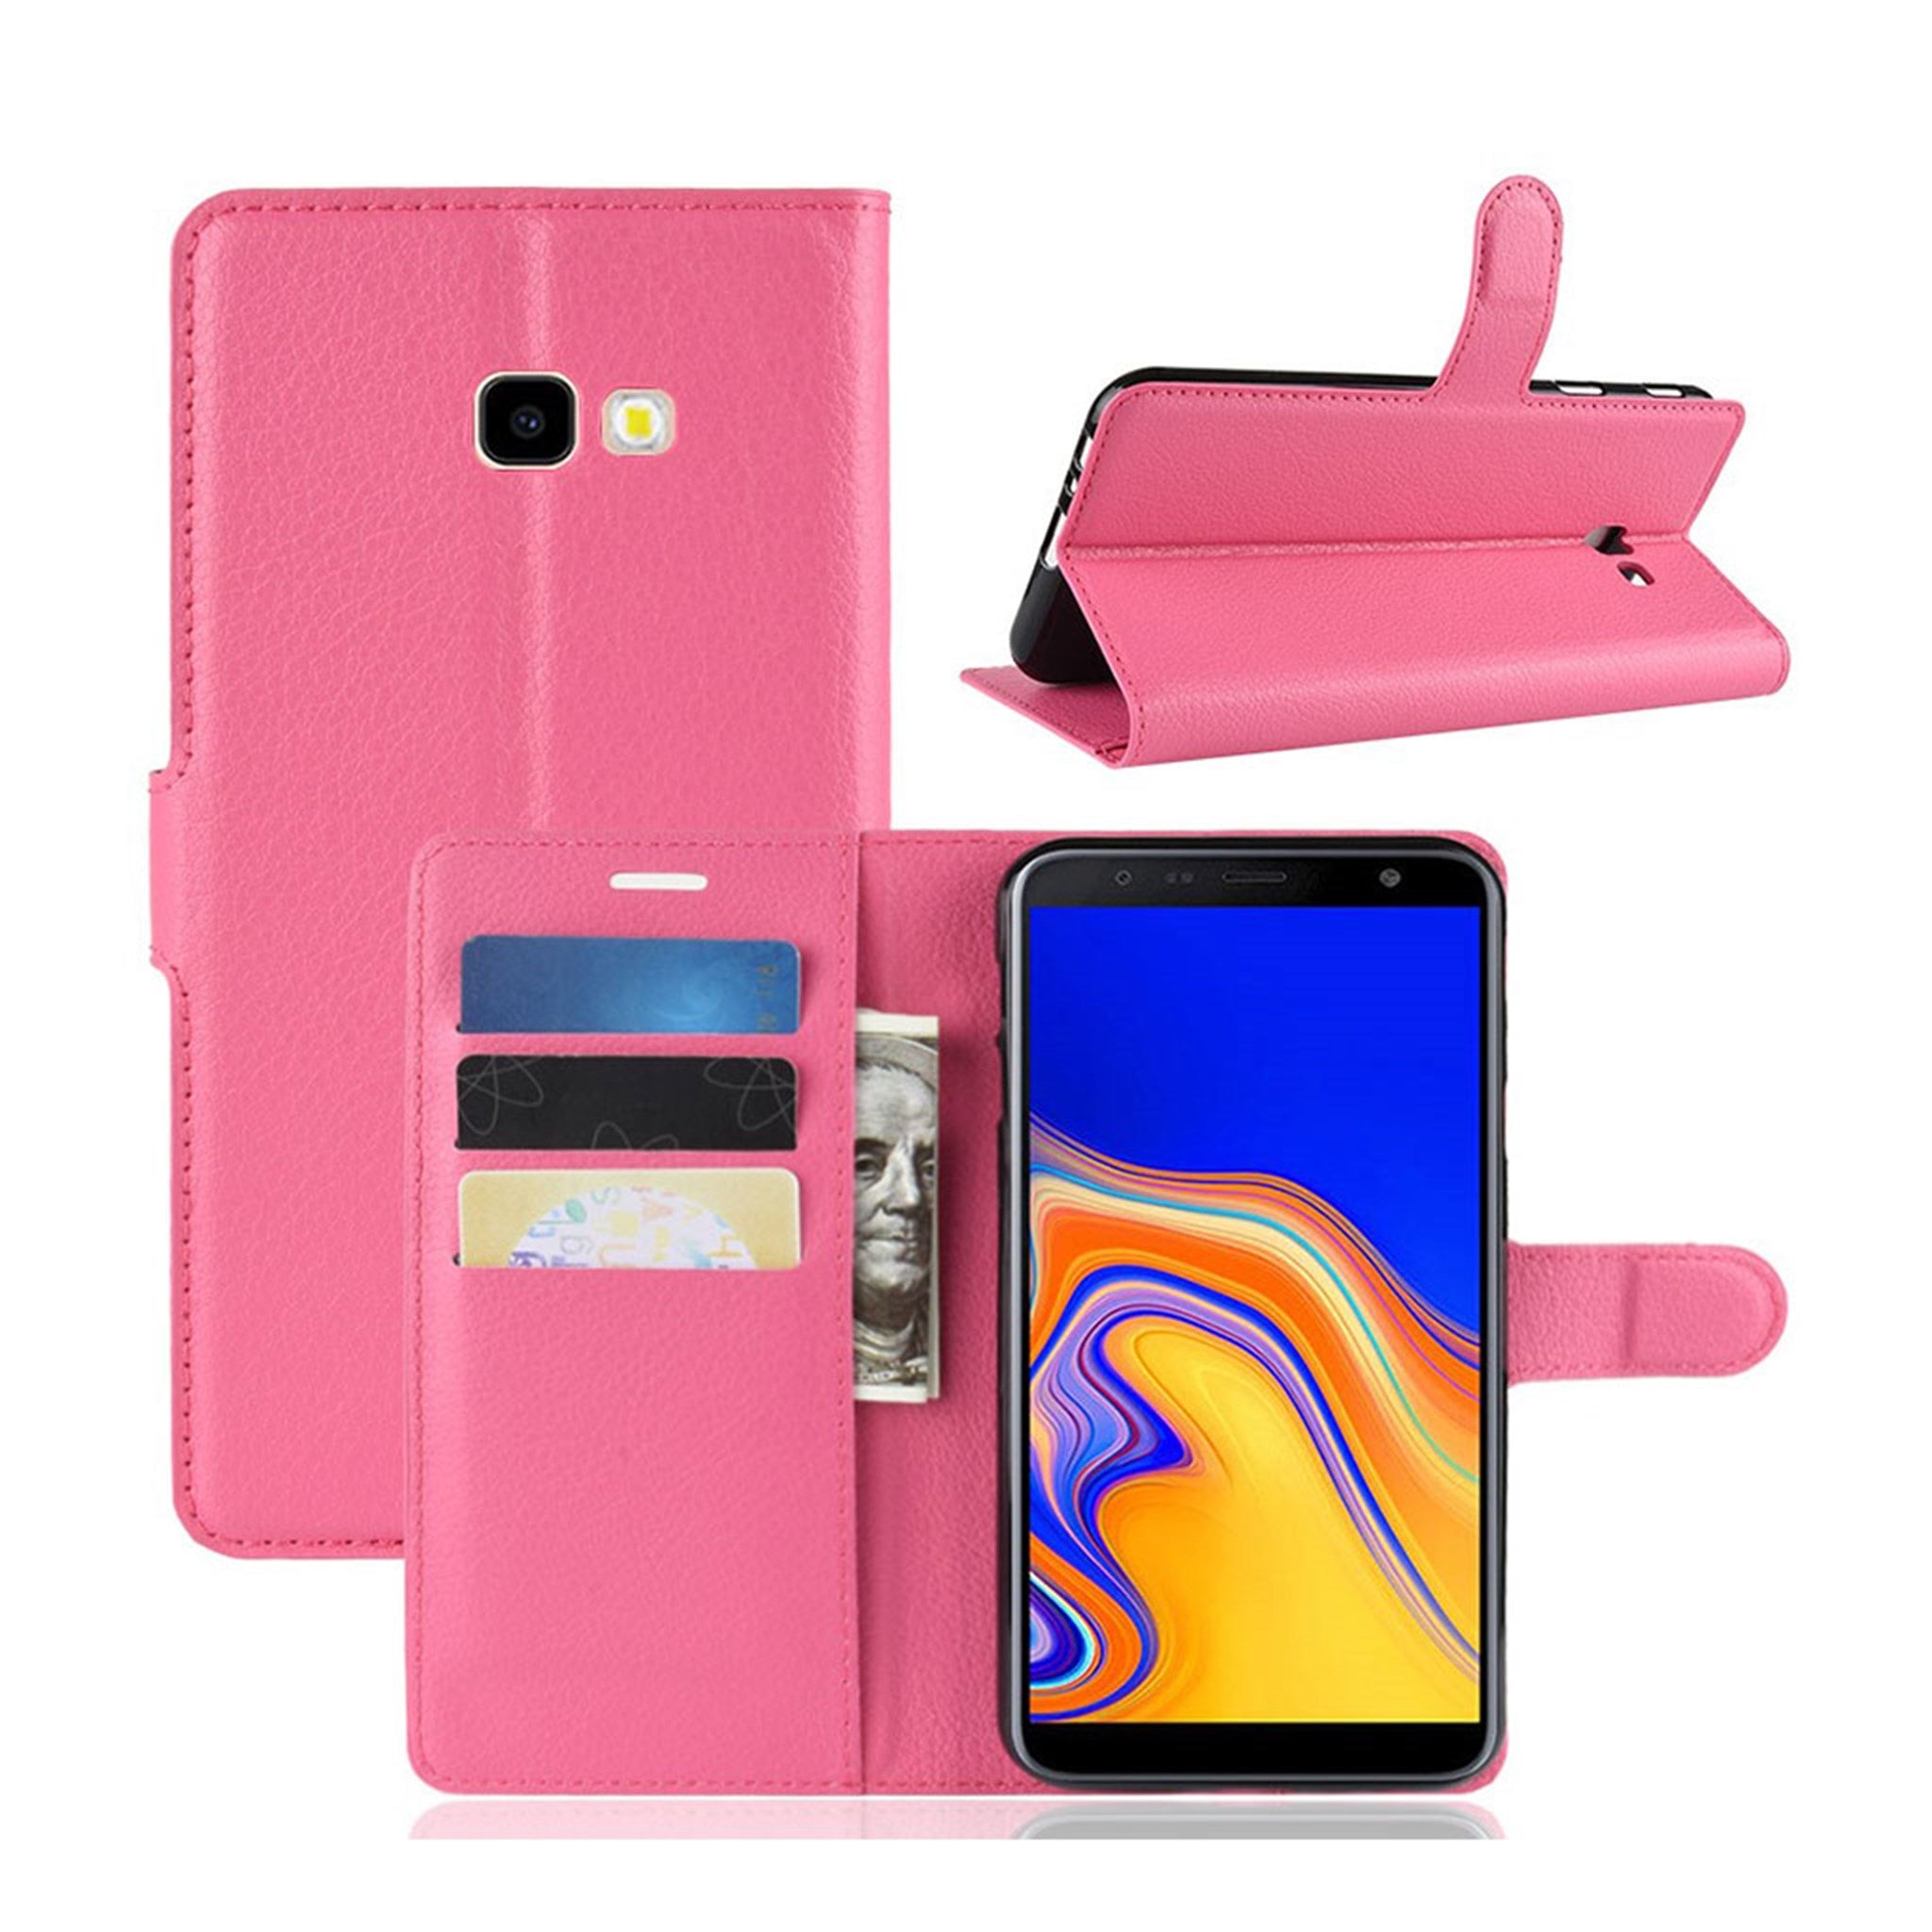 Samsung Galaxy J4 Plus (2018) litchi skin leather flip case - Rose